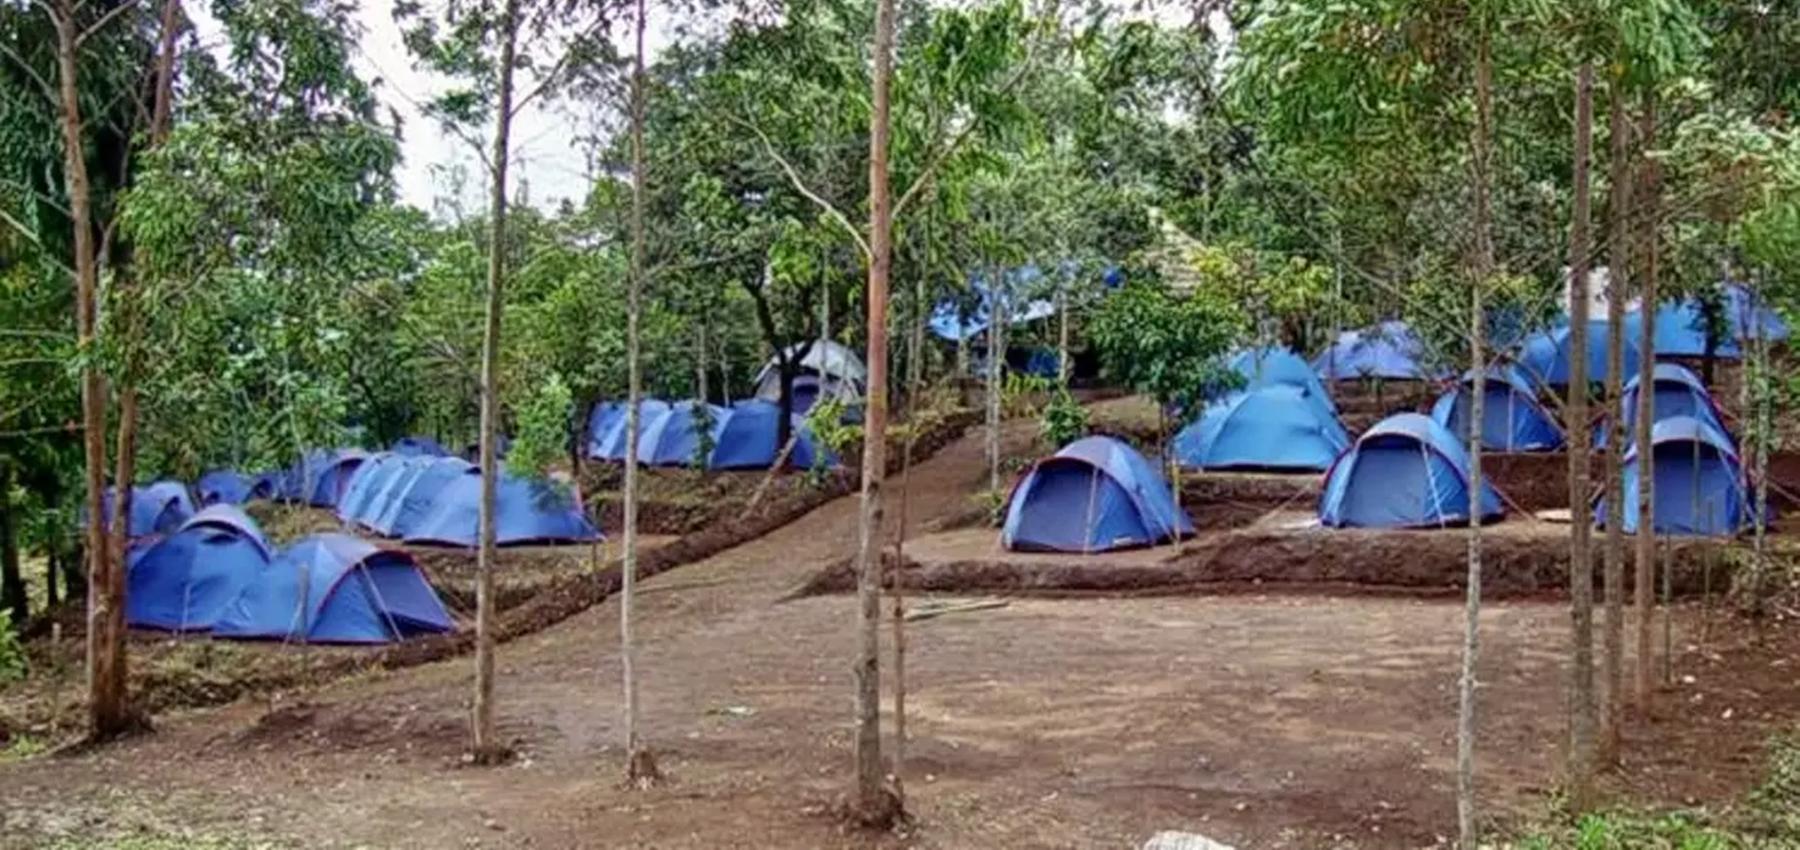 17 C Camping